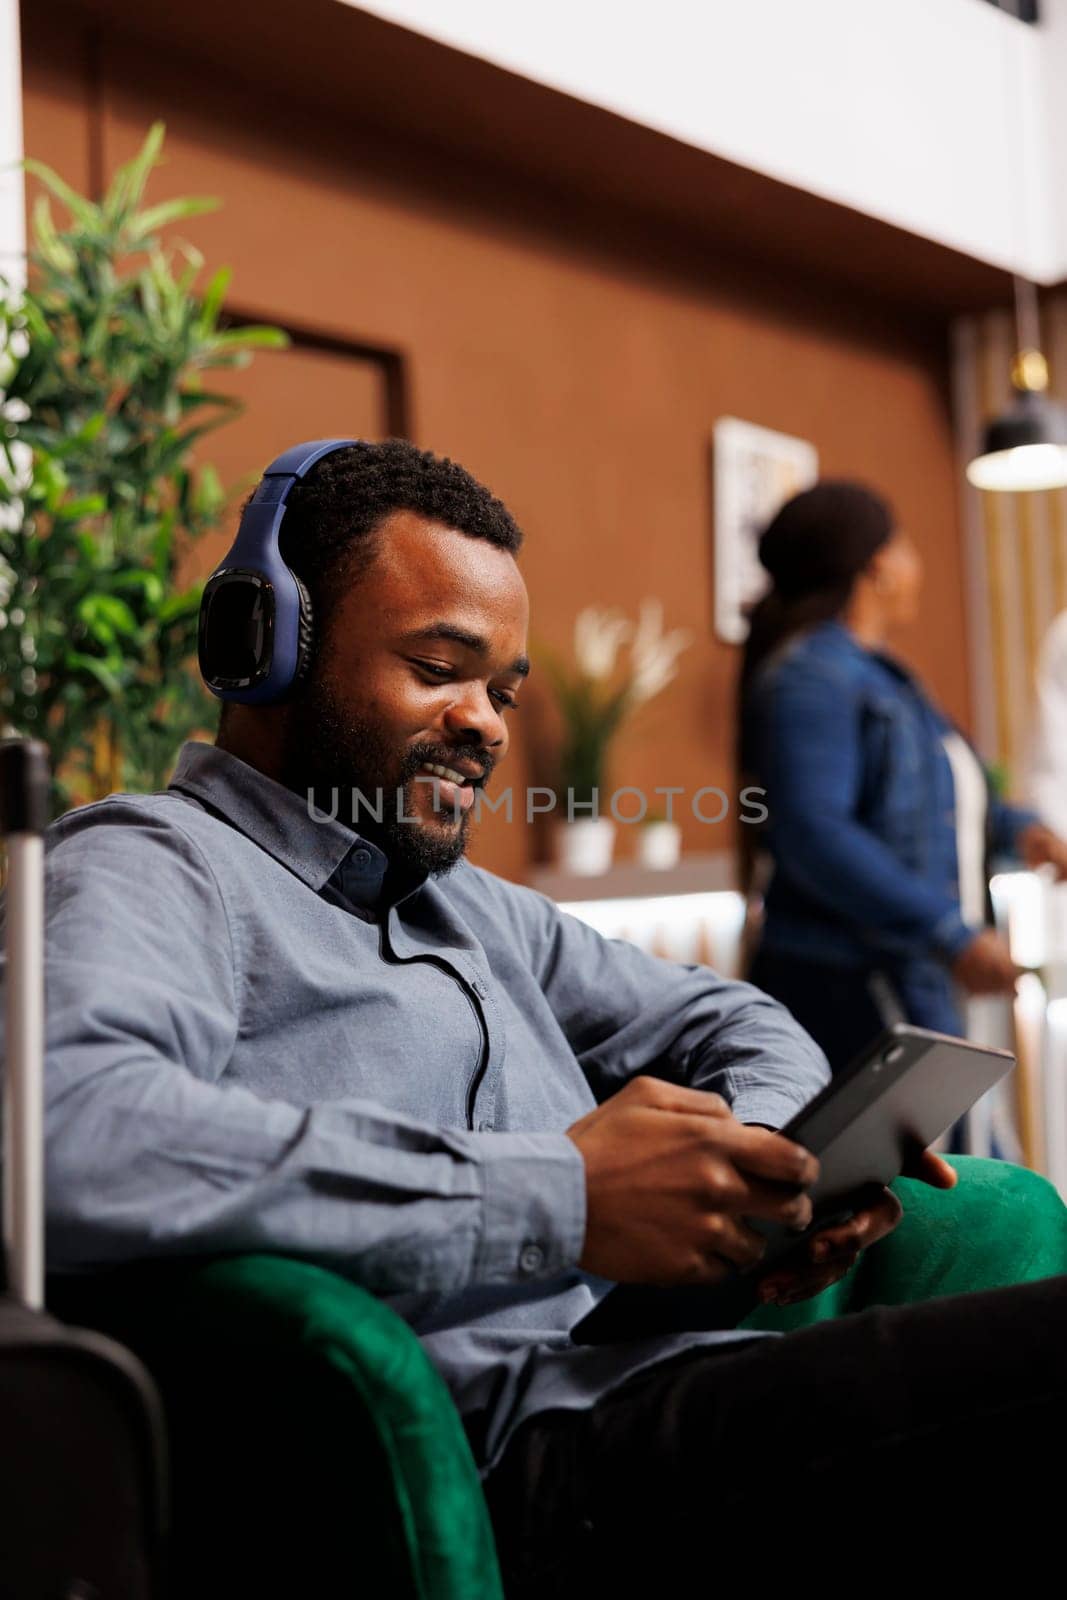 Black guy hotel guest browsing internet by DCStudio